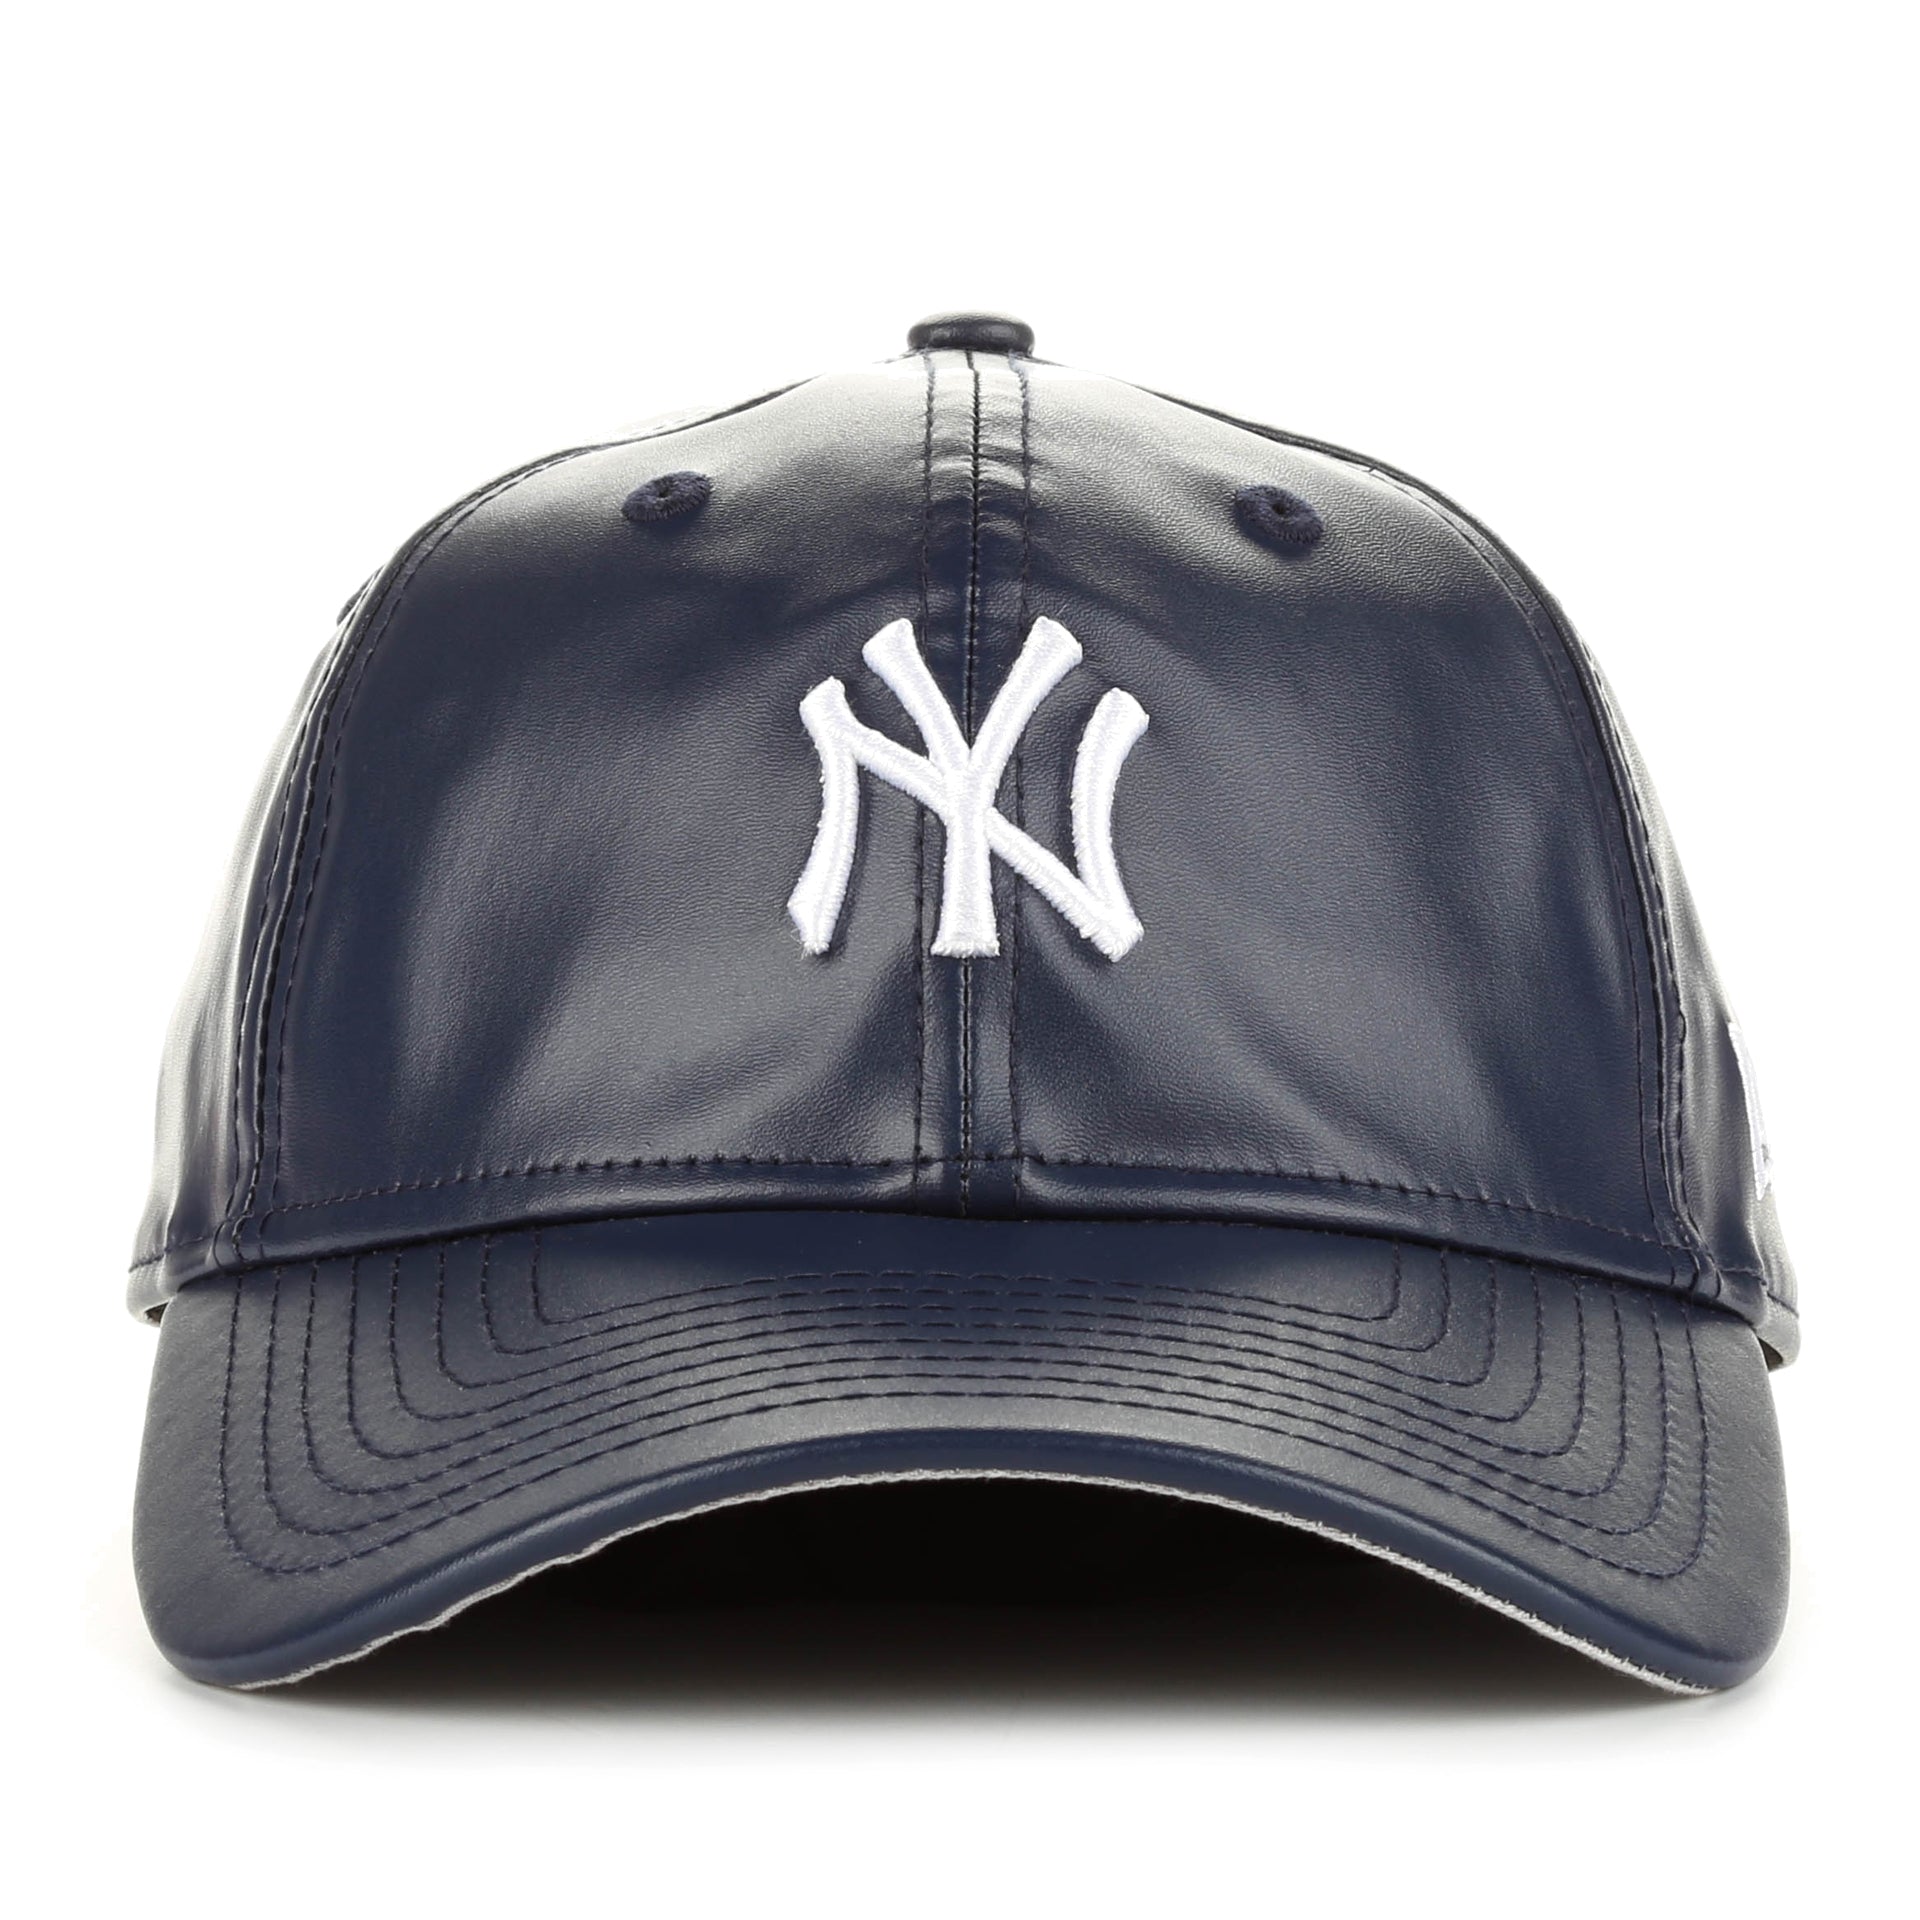 New Era 9Twenty PU Leather Squad Cap - New York Yankees/Navy - New